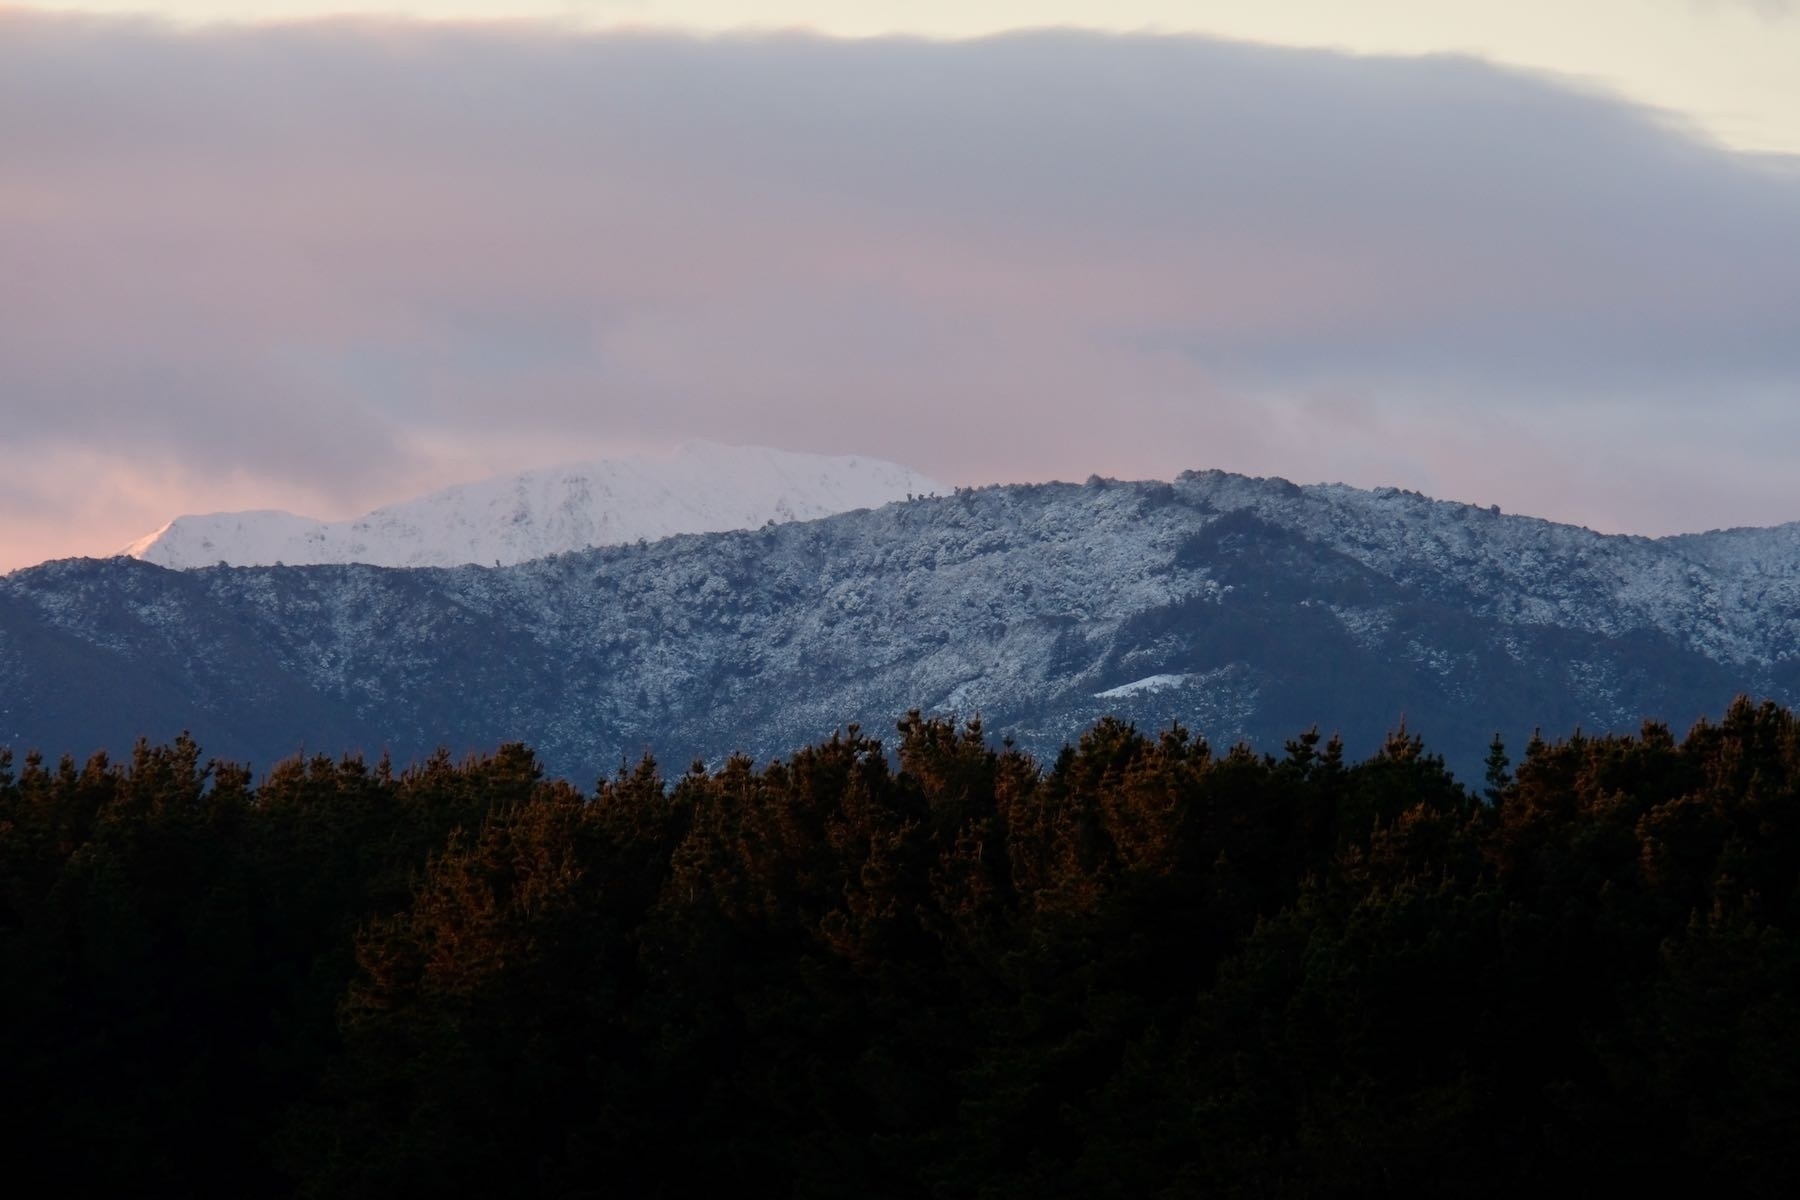 Snow clad peak and sprinkled, tree-clad foothills. 